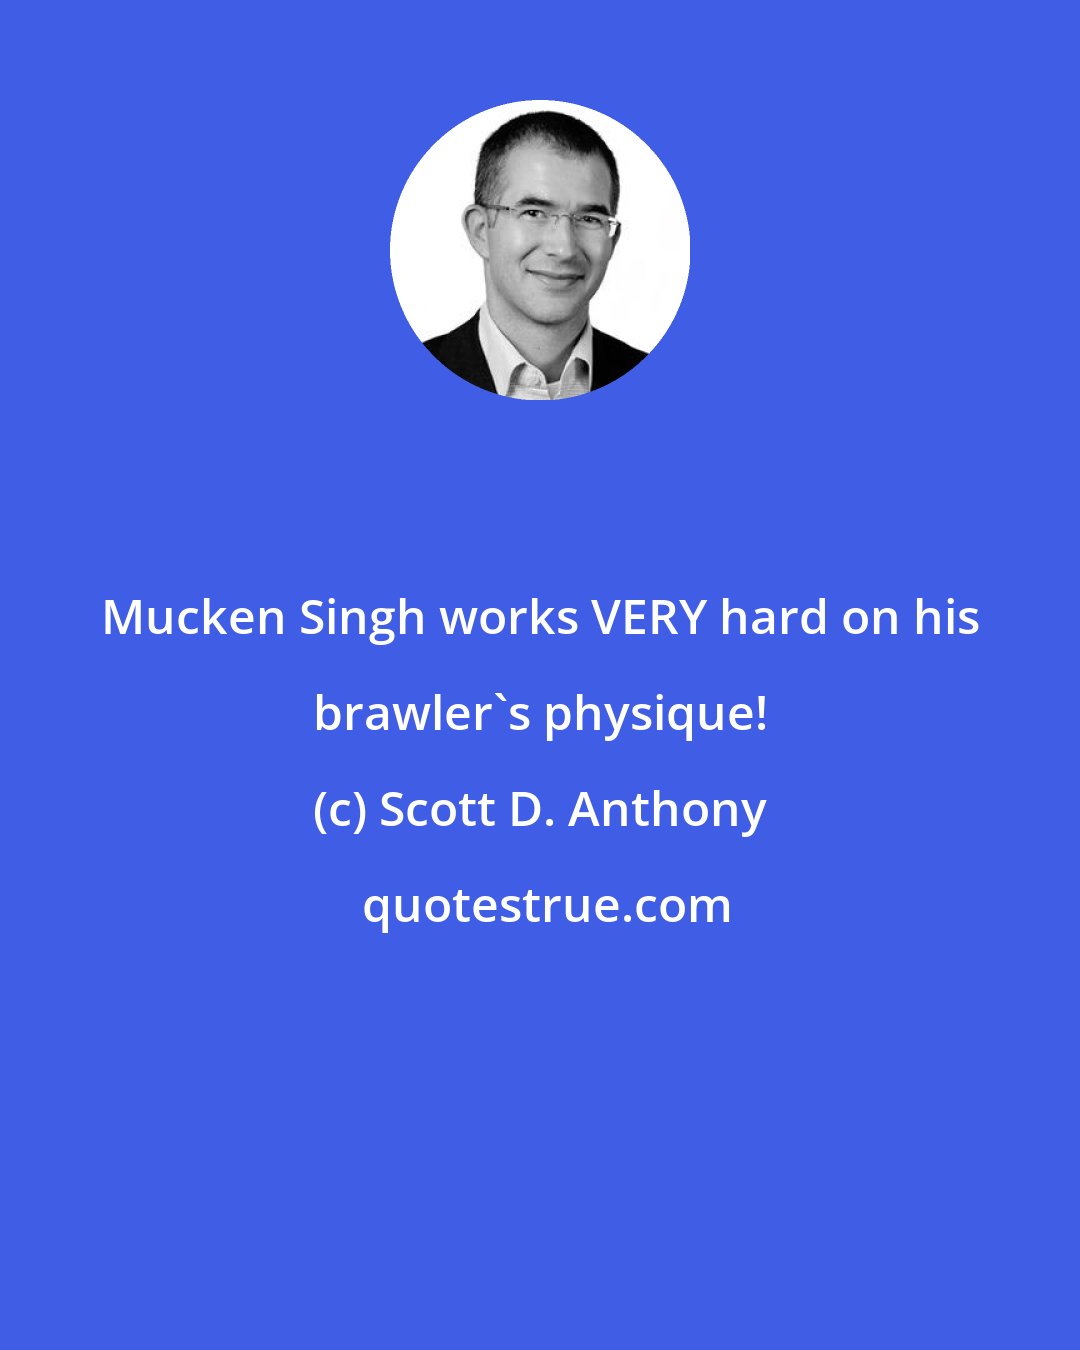 Scott D. Anthony: Mucken Singh works VERY hard on his brawler's physique!